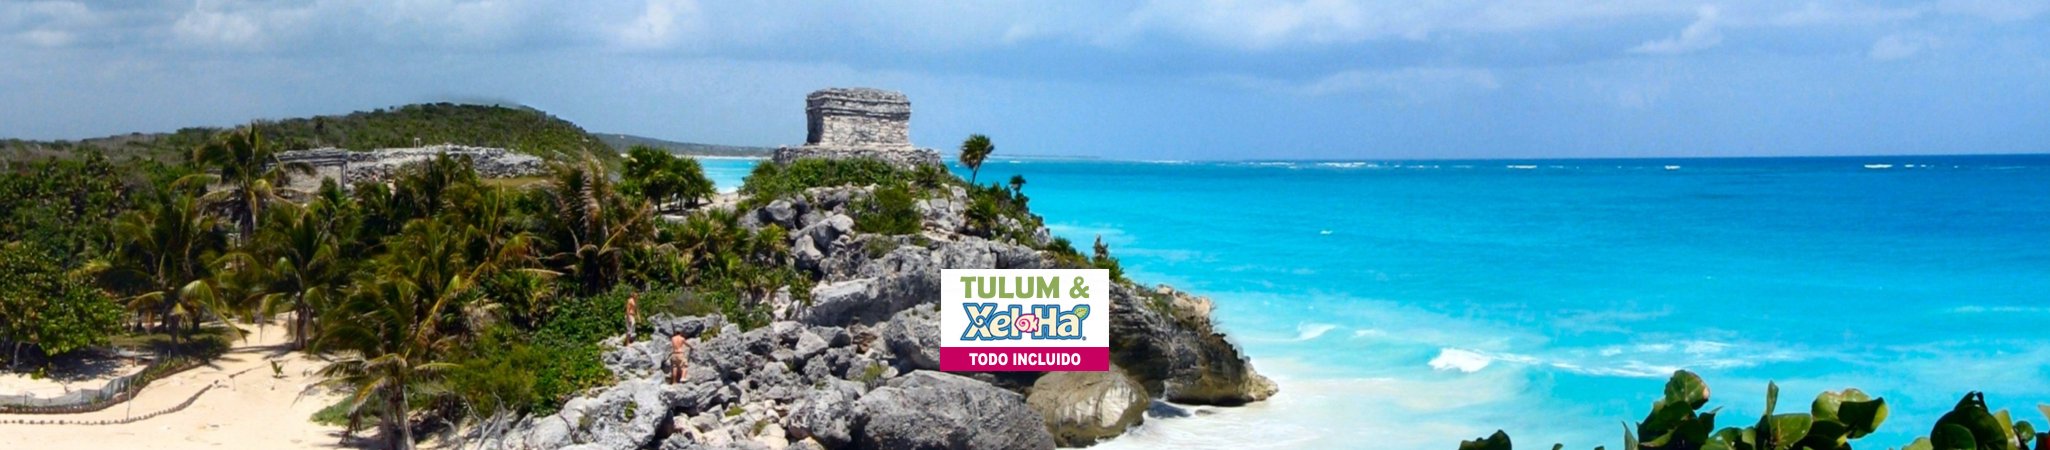 Tour Tulum barato desde Cancun y Playa del Carmen